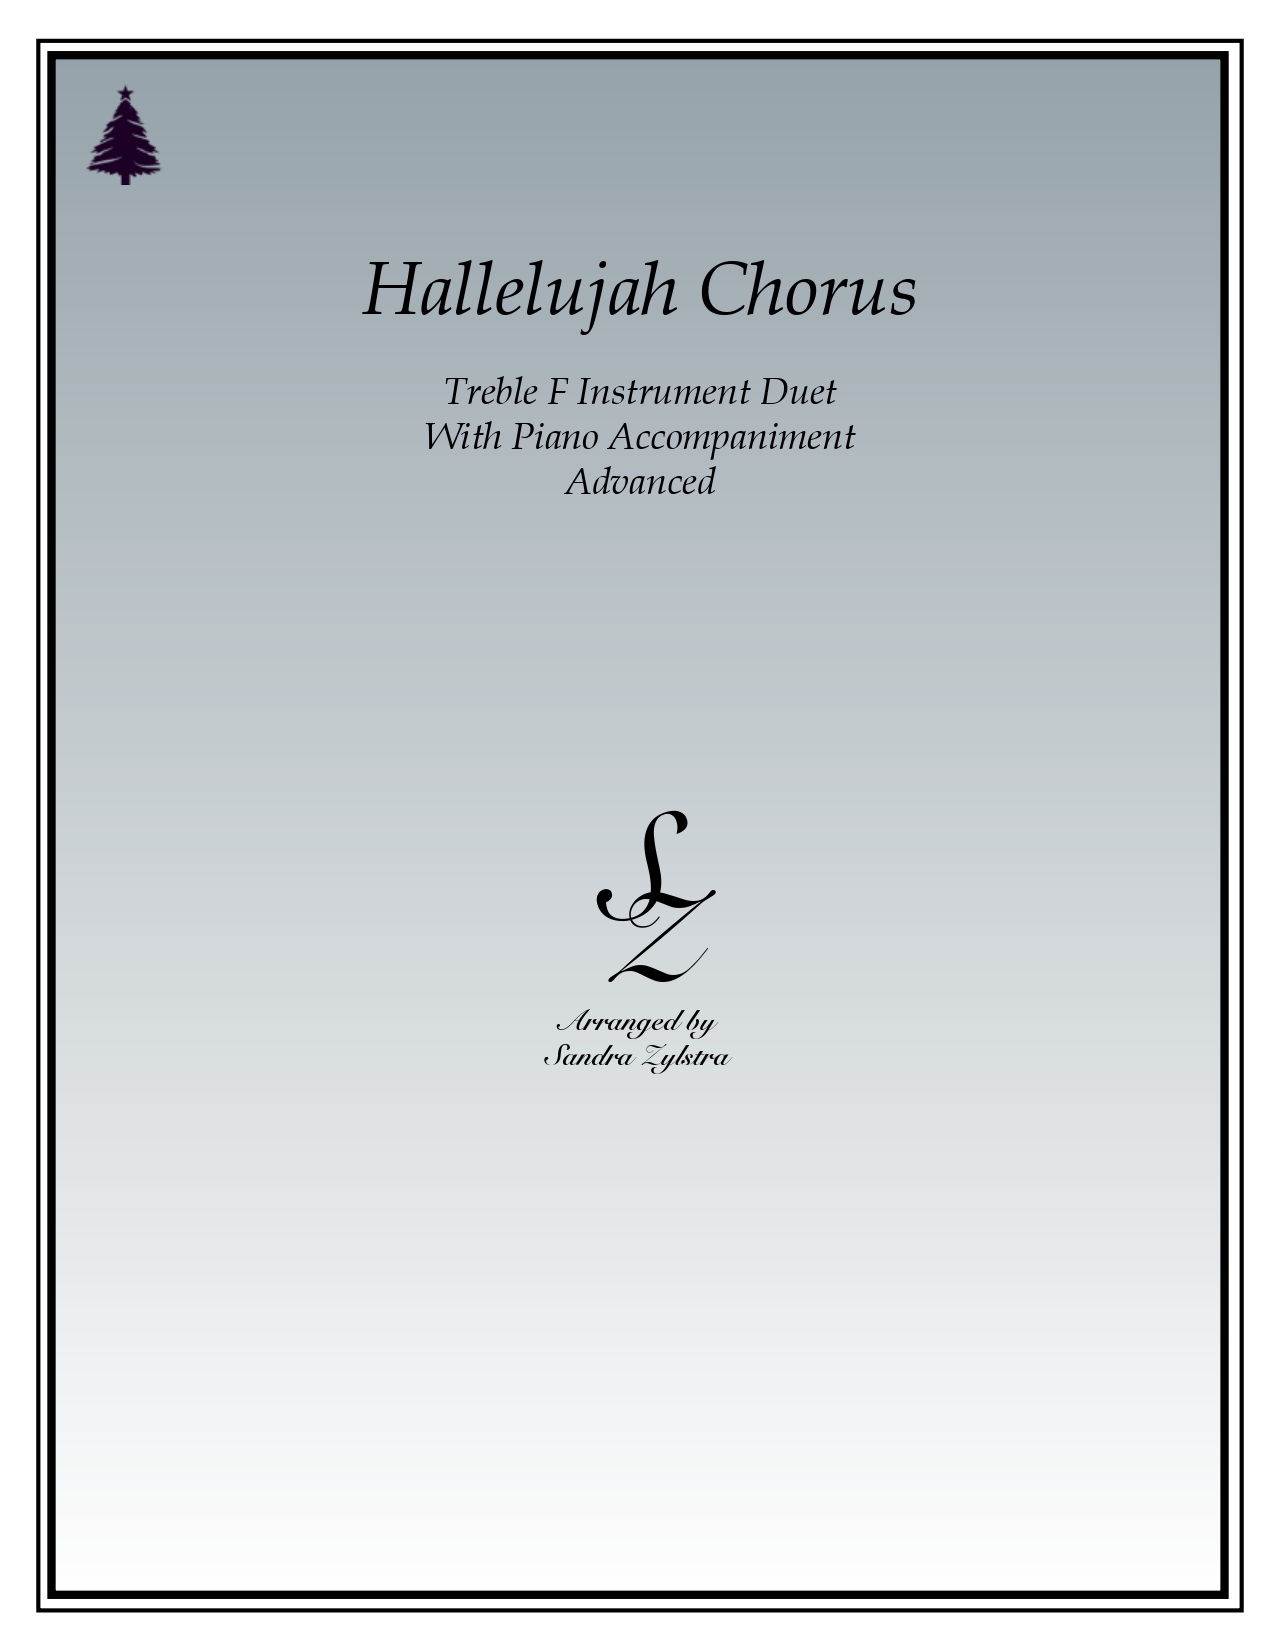 Hallelujah Chorus F instrument duet parts cover page 00011